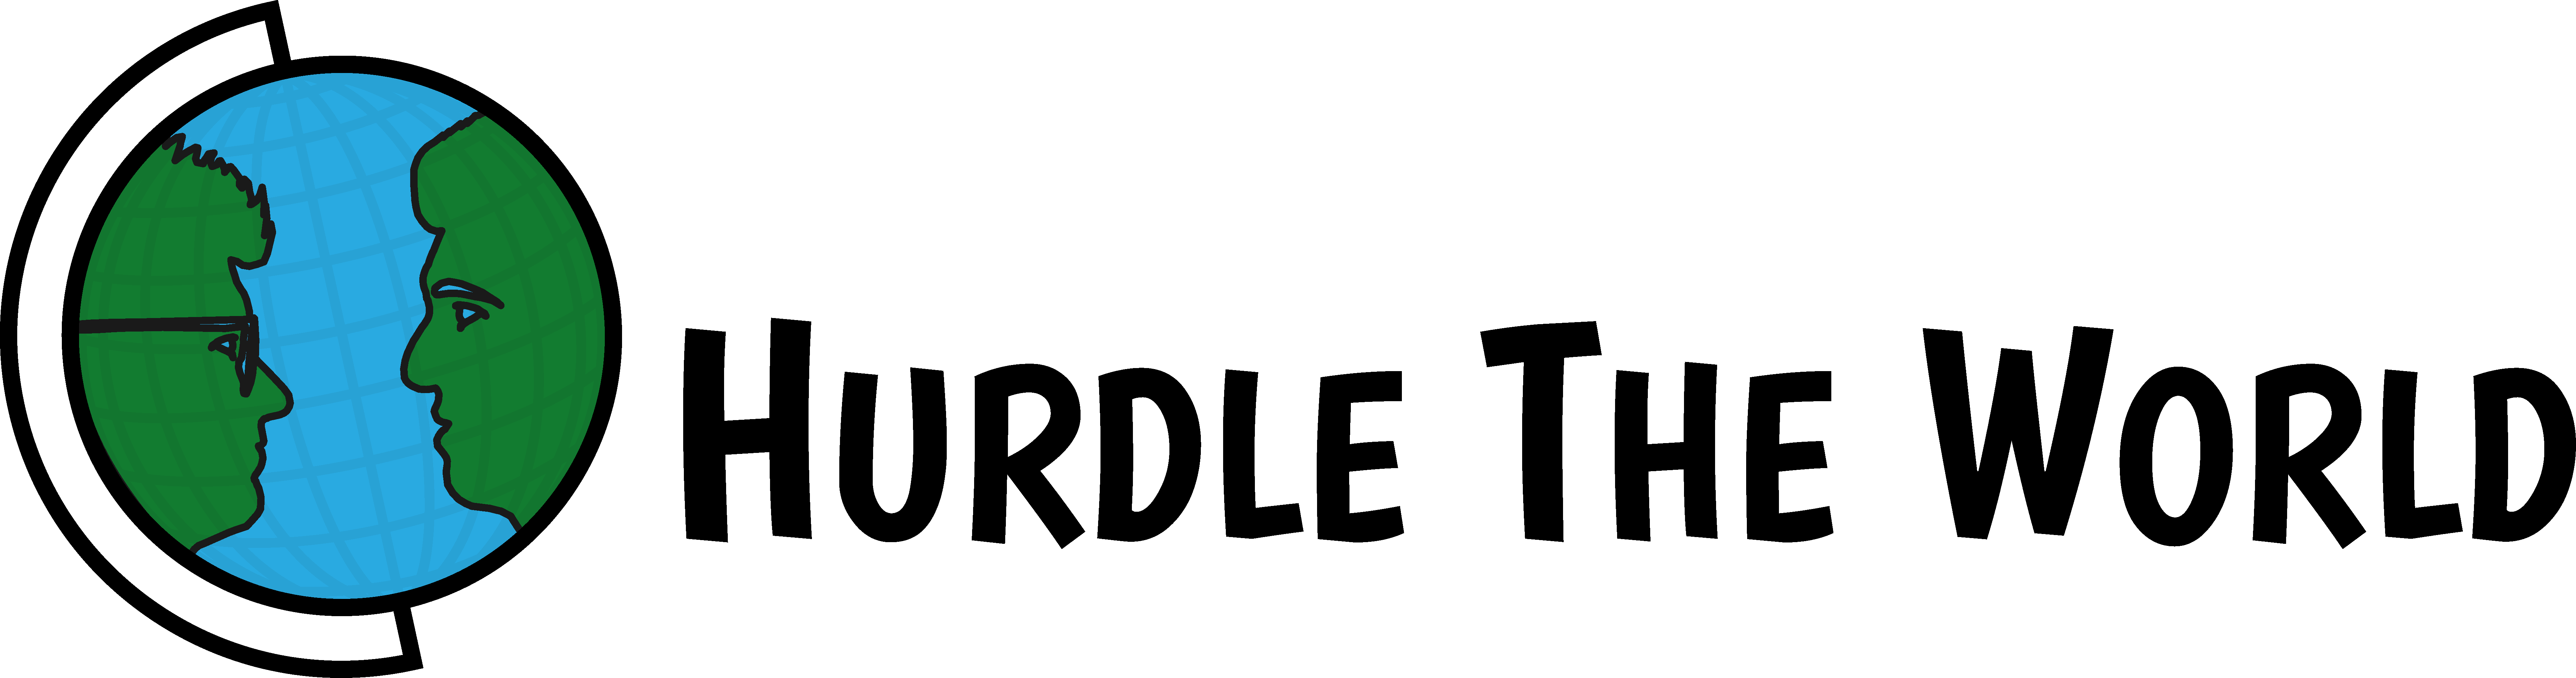 Hurdle The World Logo